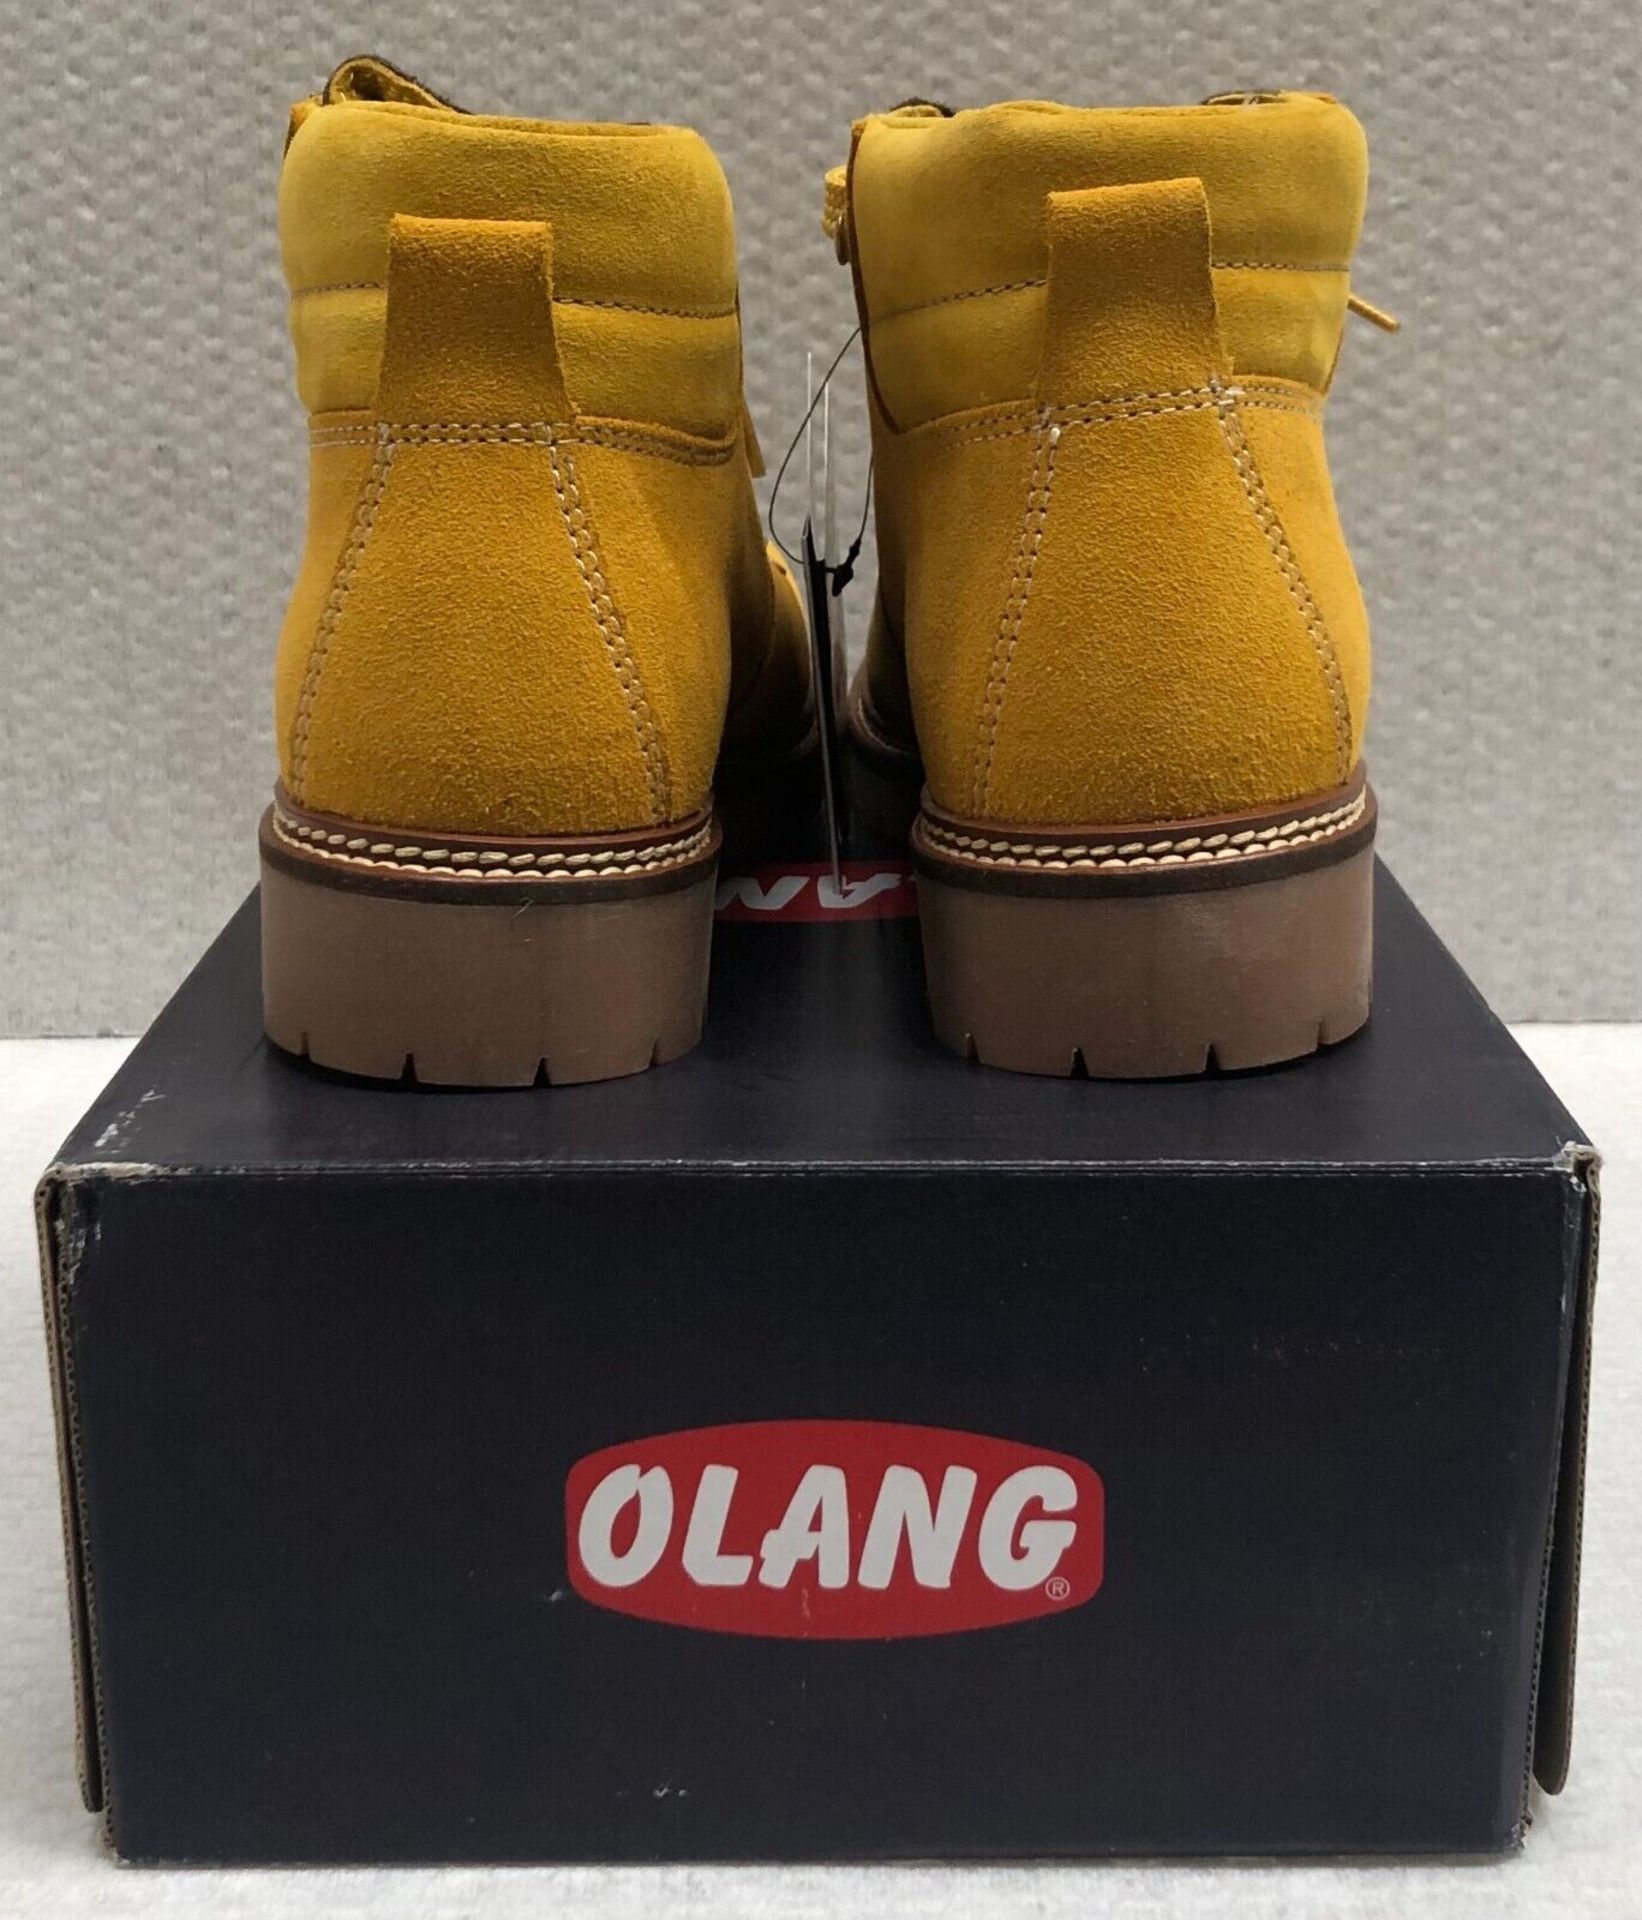 1 x Pair of Designer Olang Women's Winter Boots - Merano.Win.BTX 822 Giallo - Euro Size 38 - New - Image 7 of 7